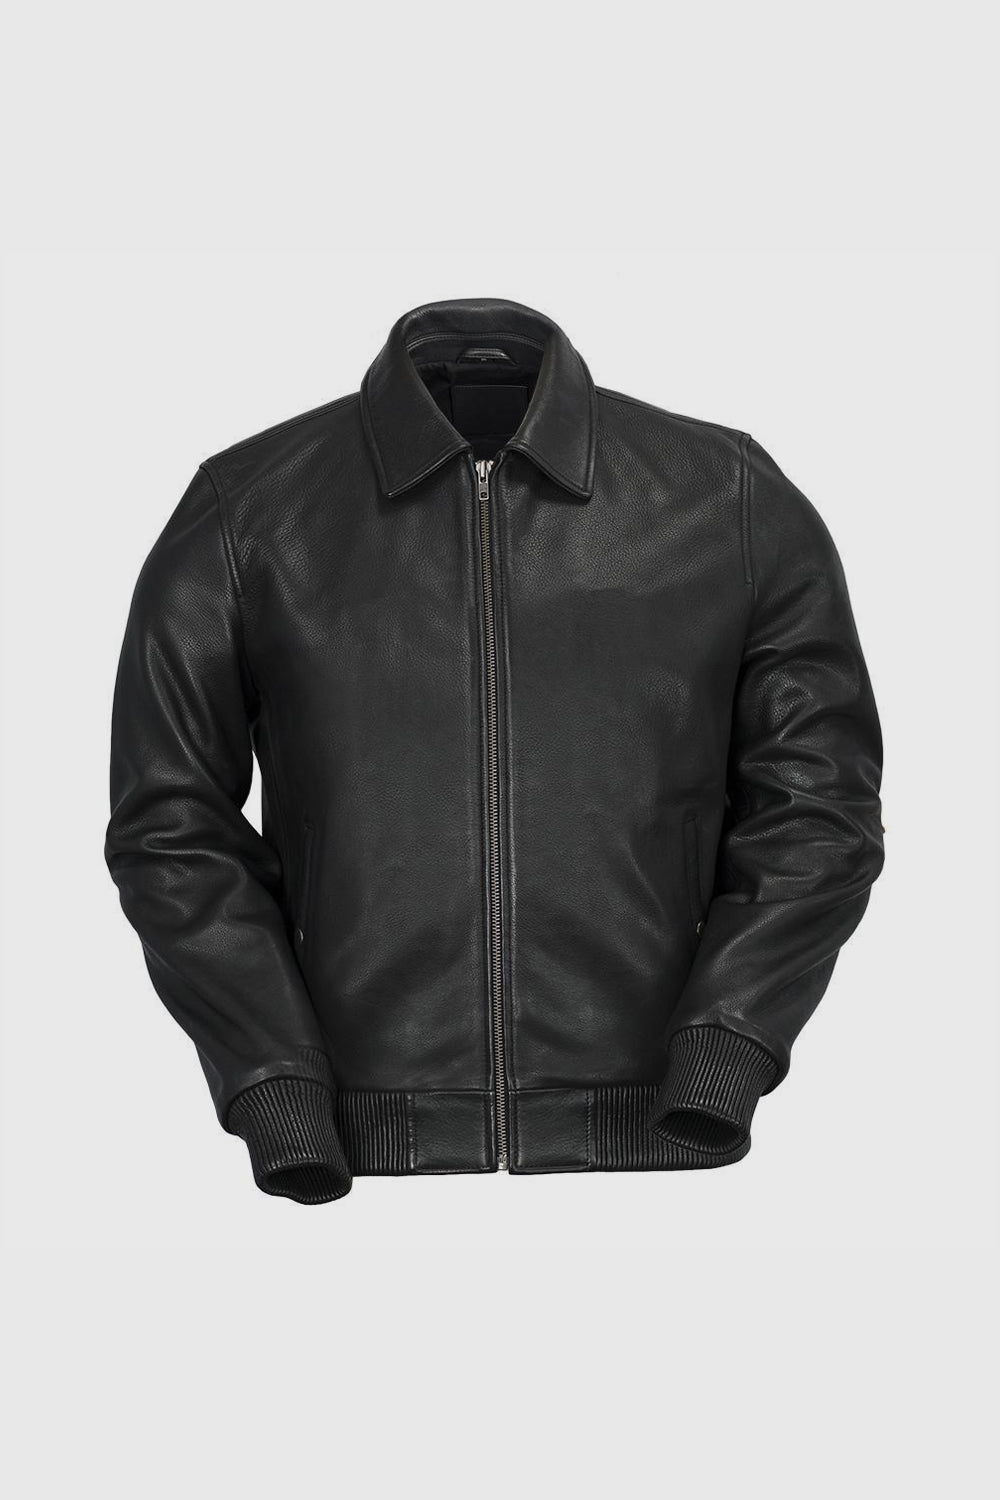 Castor Mens Fashion Leather Jacket